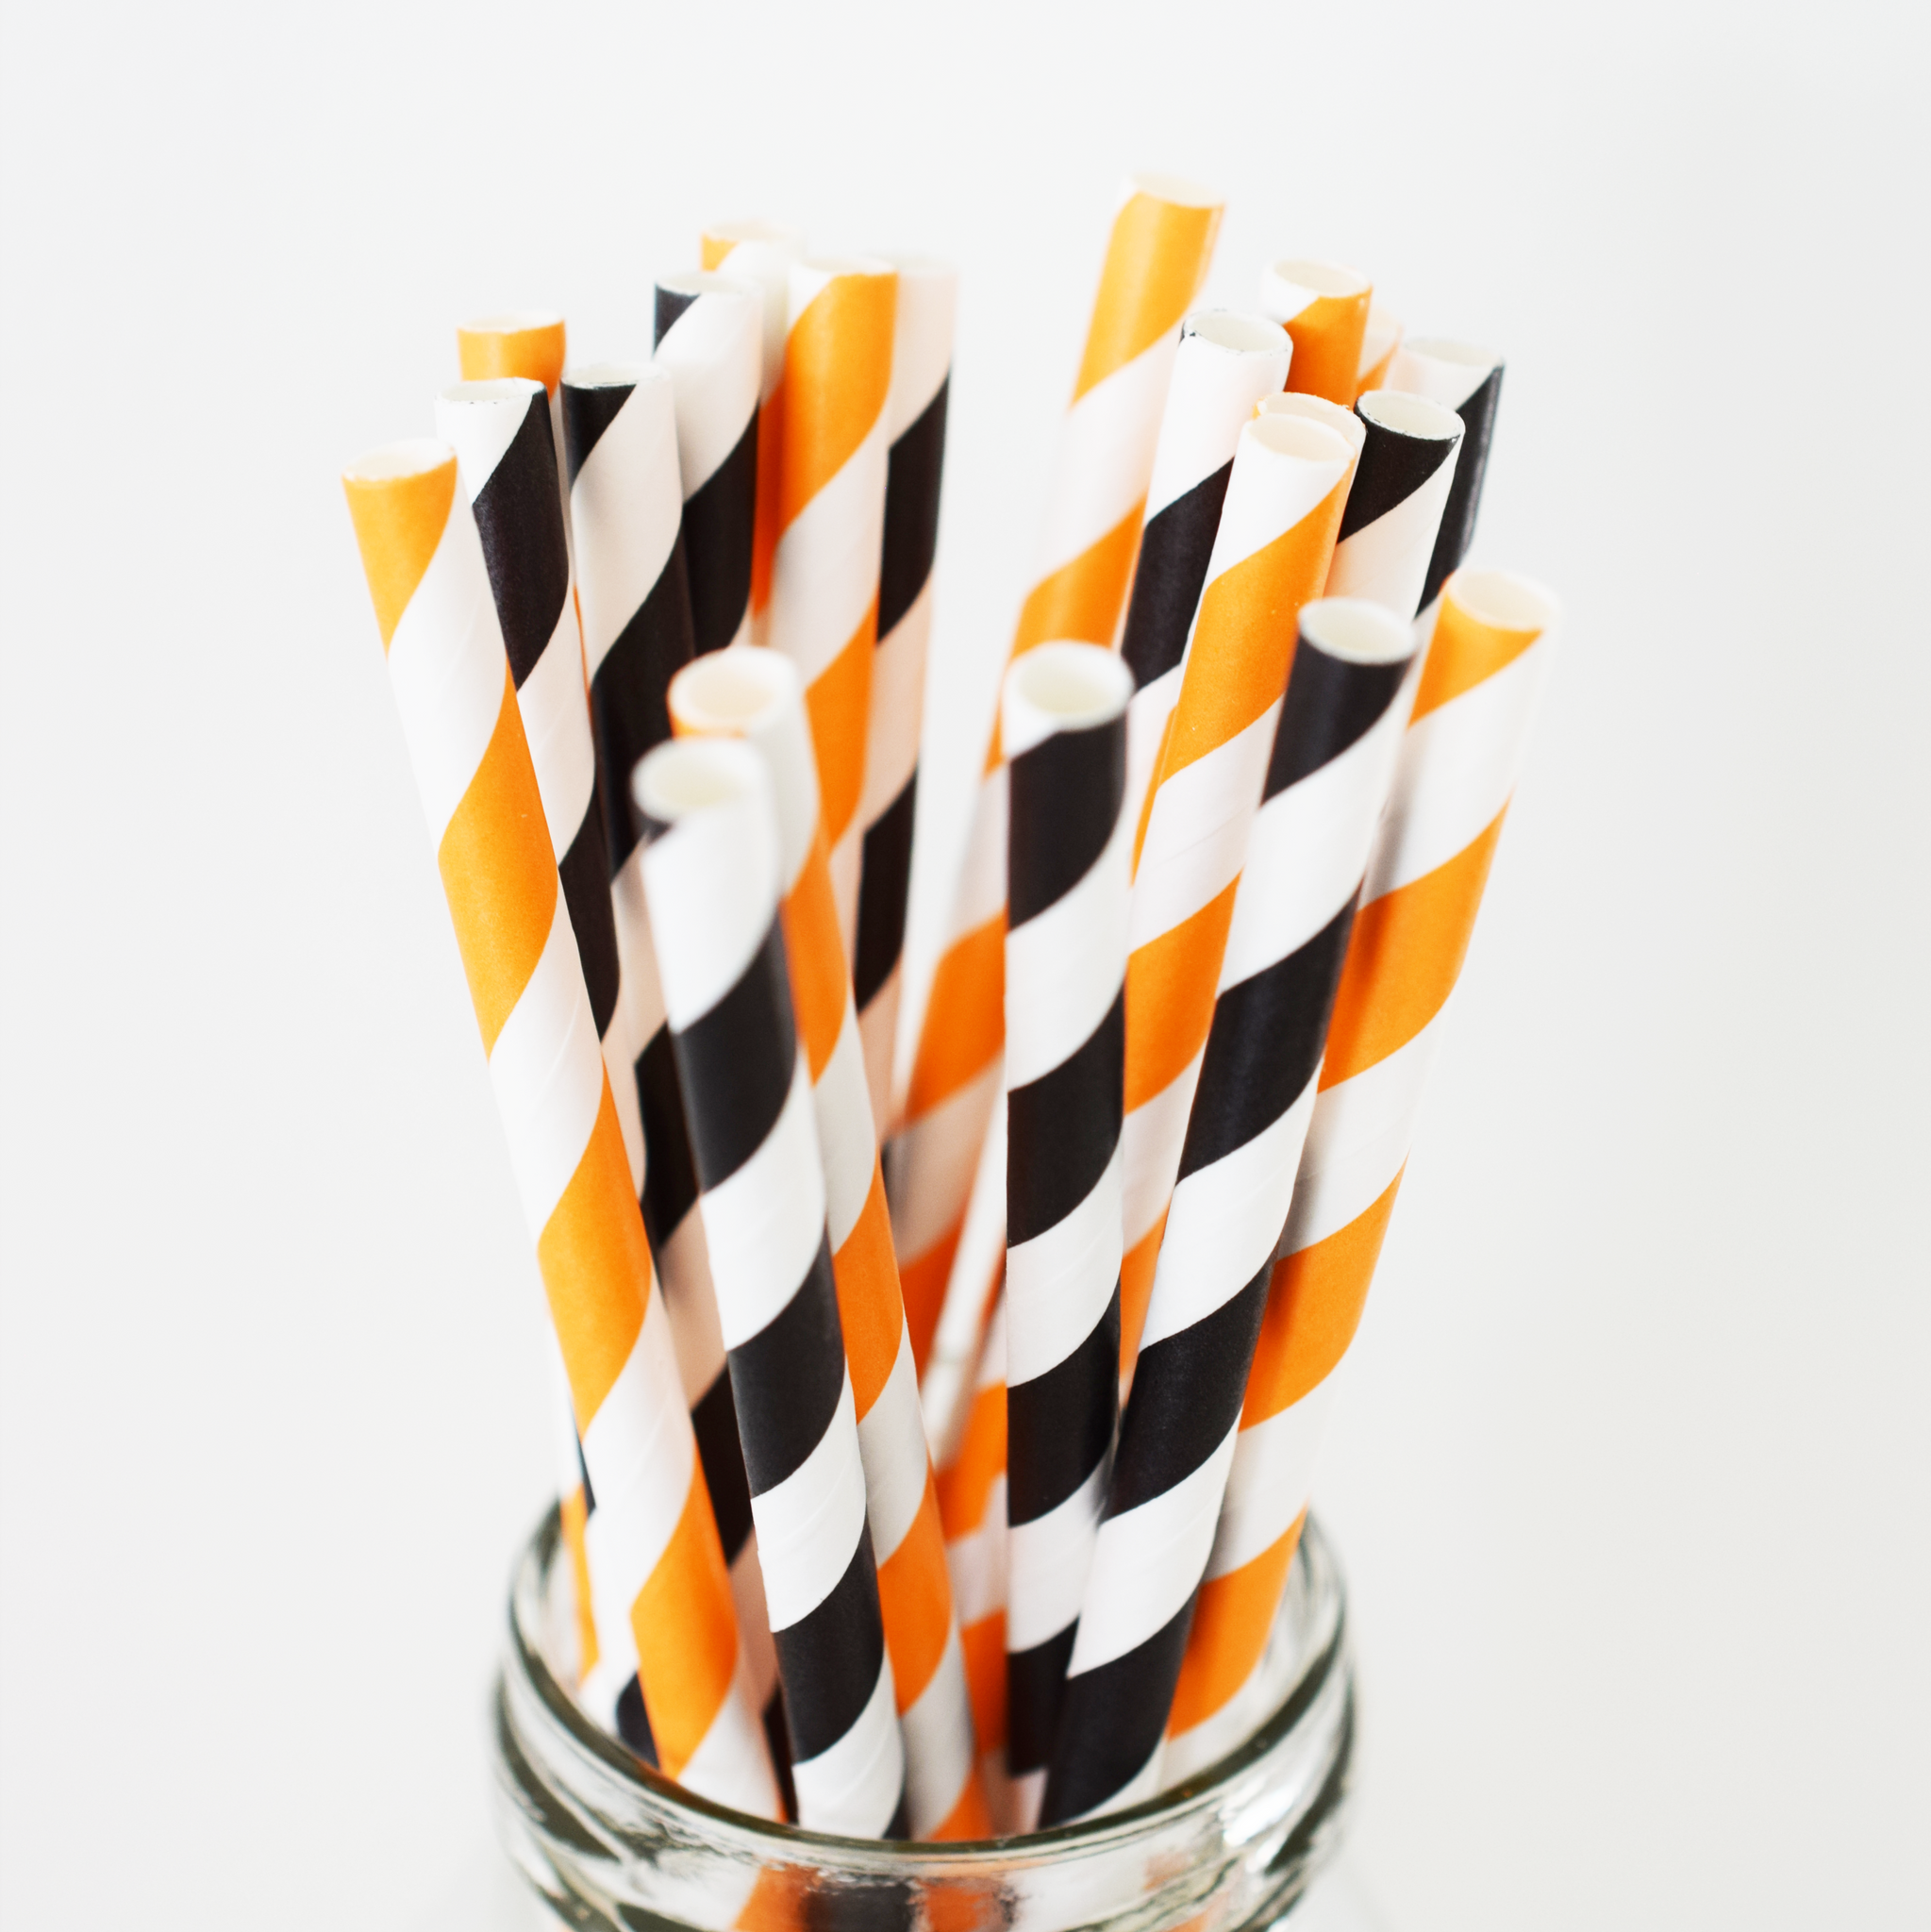 Pink Striped Paper Straws (25)